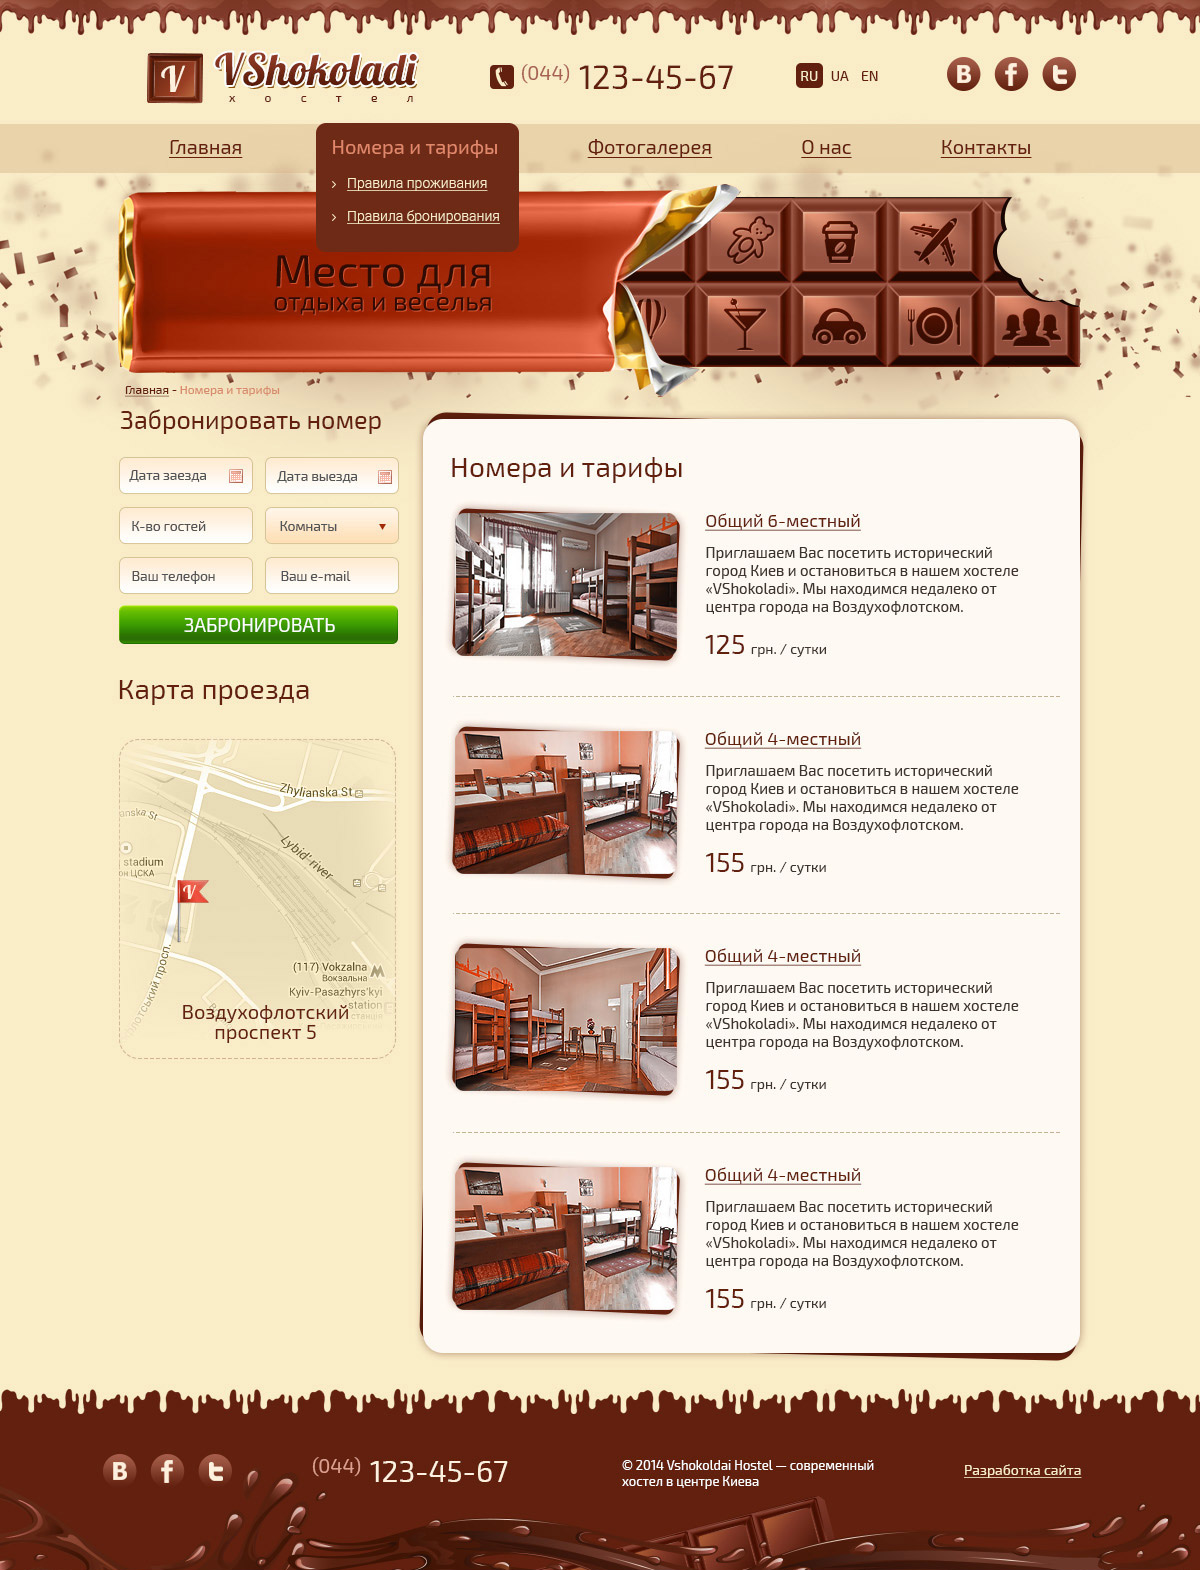 Room page design of Vshokoladi website